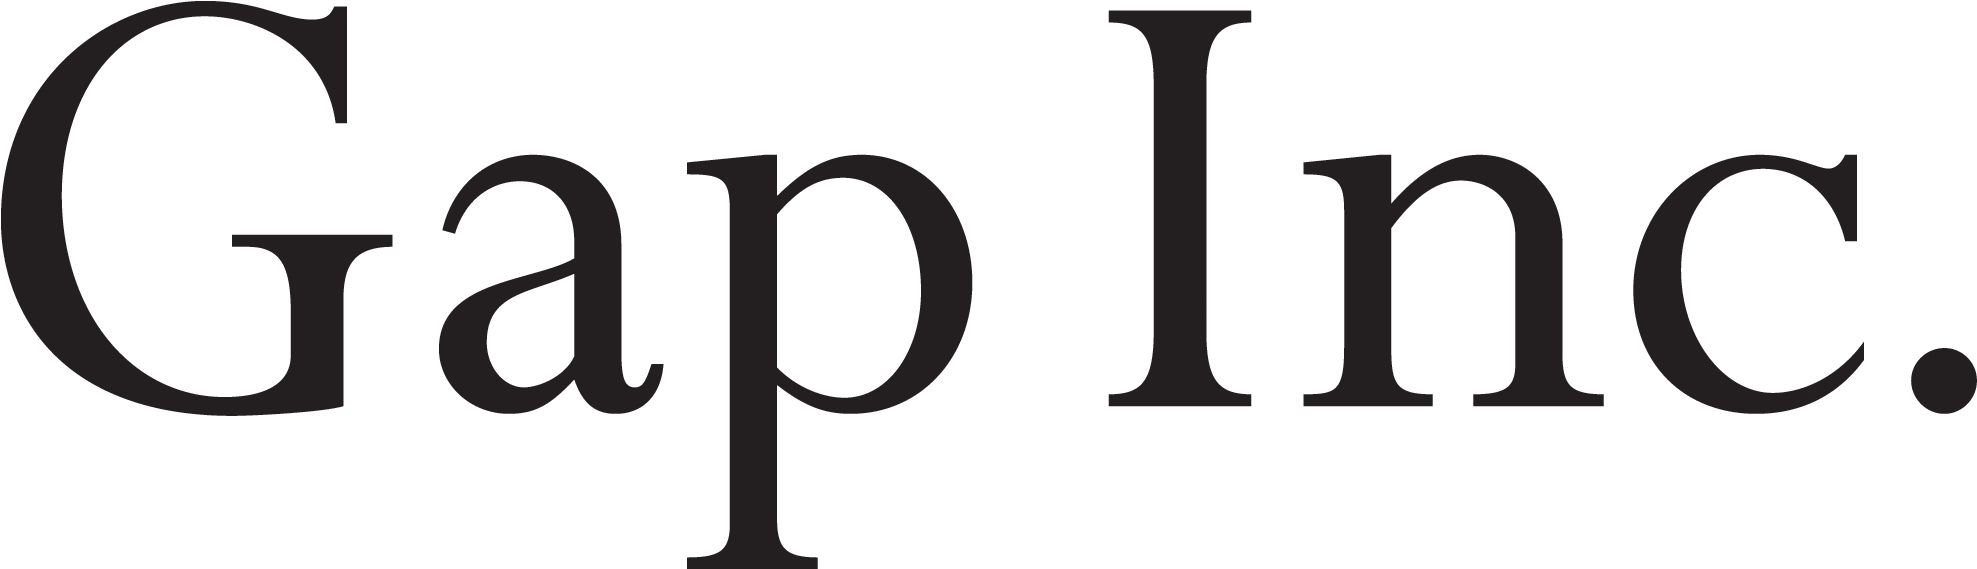 Вектор зазор логотип бесплатно PNG Image